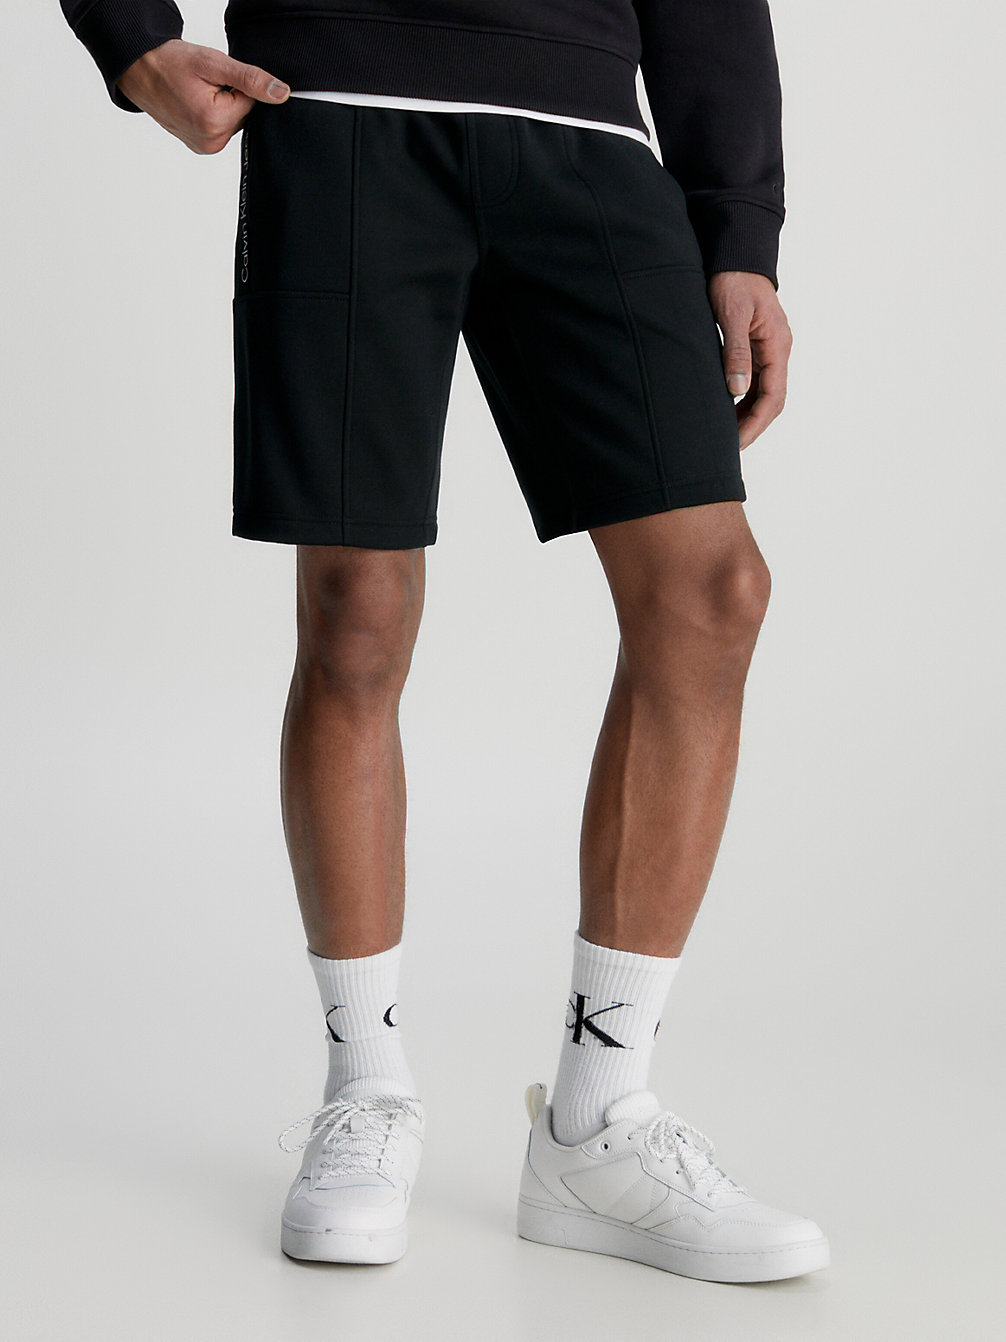 CK BLACK > Logo Tape-Jogging-Shorts > undefined Herren - Calvin Klein